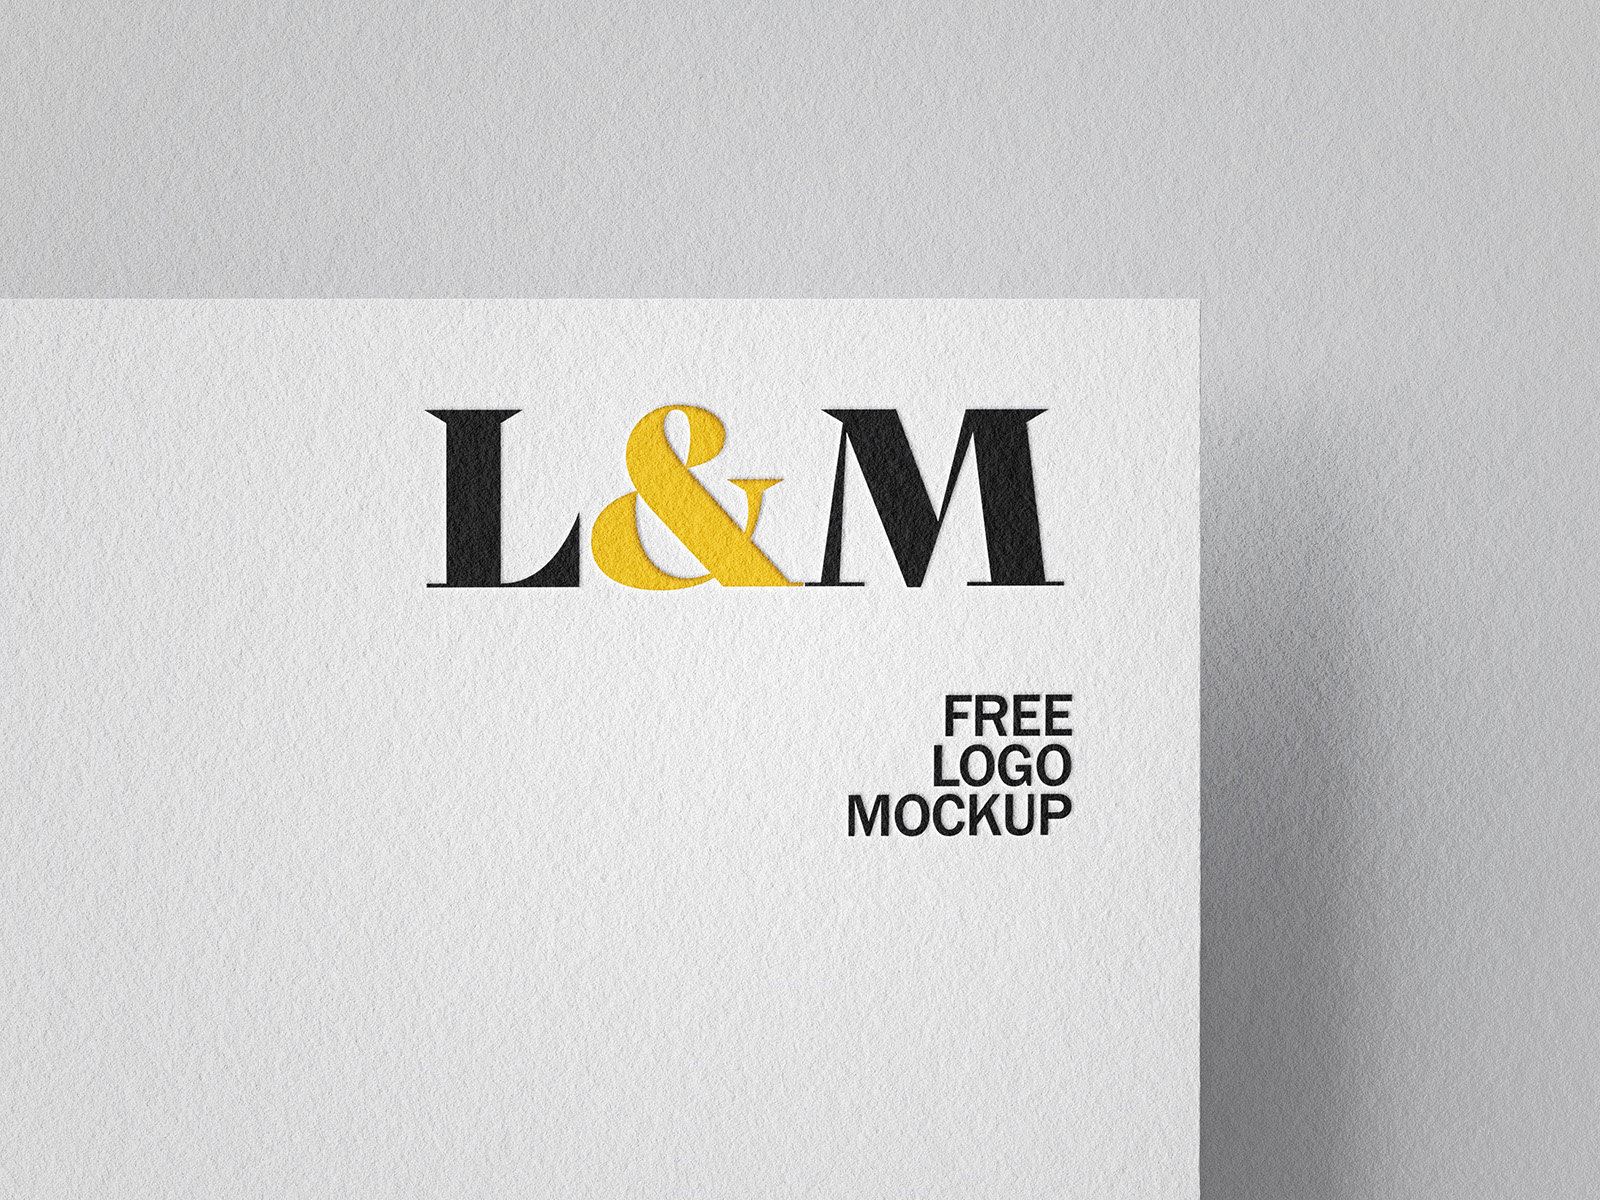 3 Mockups of Focus Logo on Paper FREE PSD